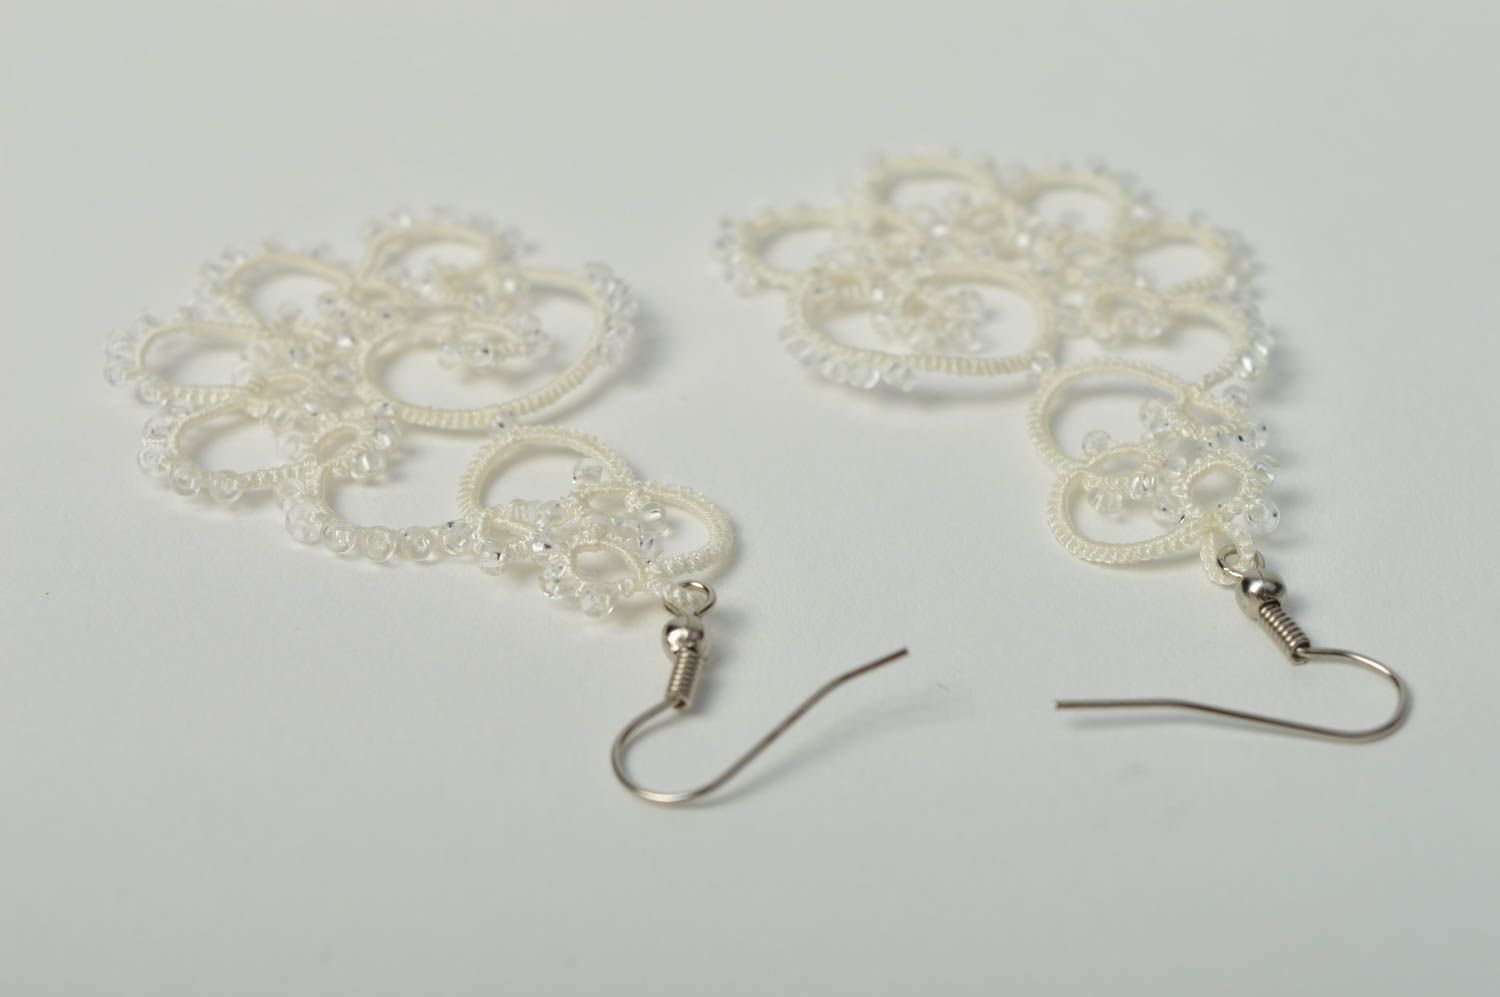 Handmade woven lace earrings artisan jewelry designs beautiful jewellery photo 4